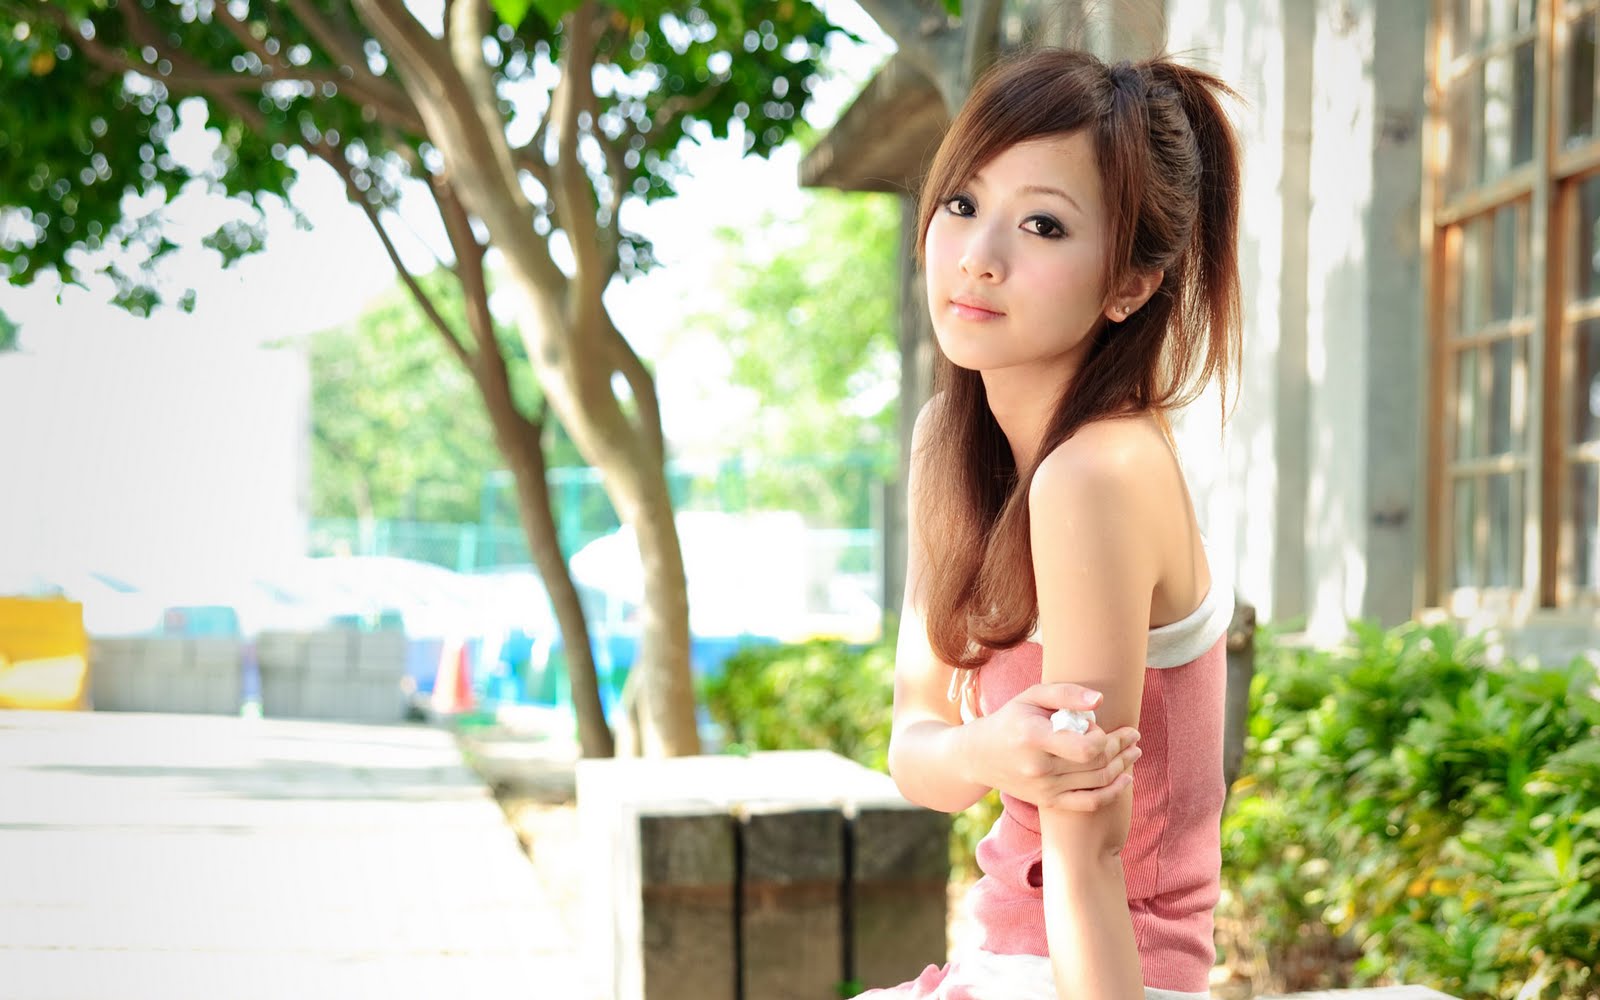 Free Download Cute Asian Girls Hd Wallpapers Desktop Wallpapers 1600x1000 For Your Desktop